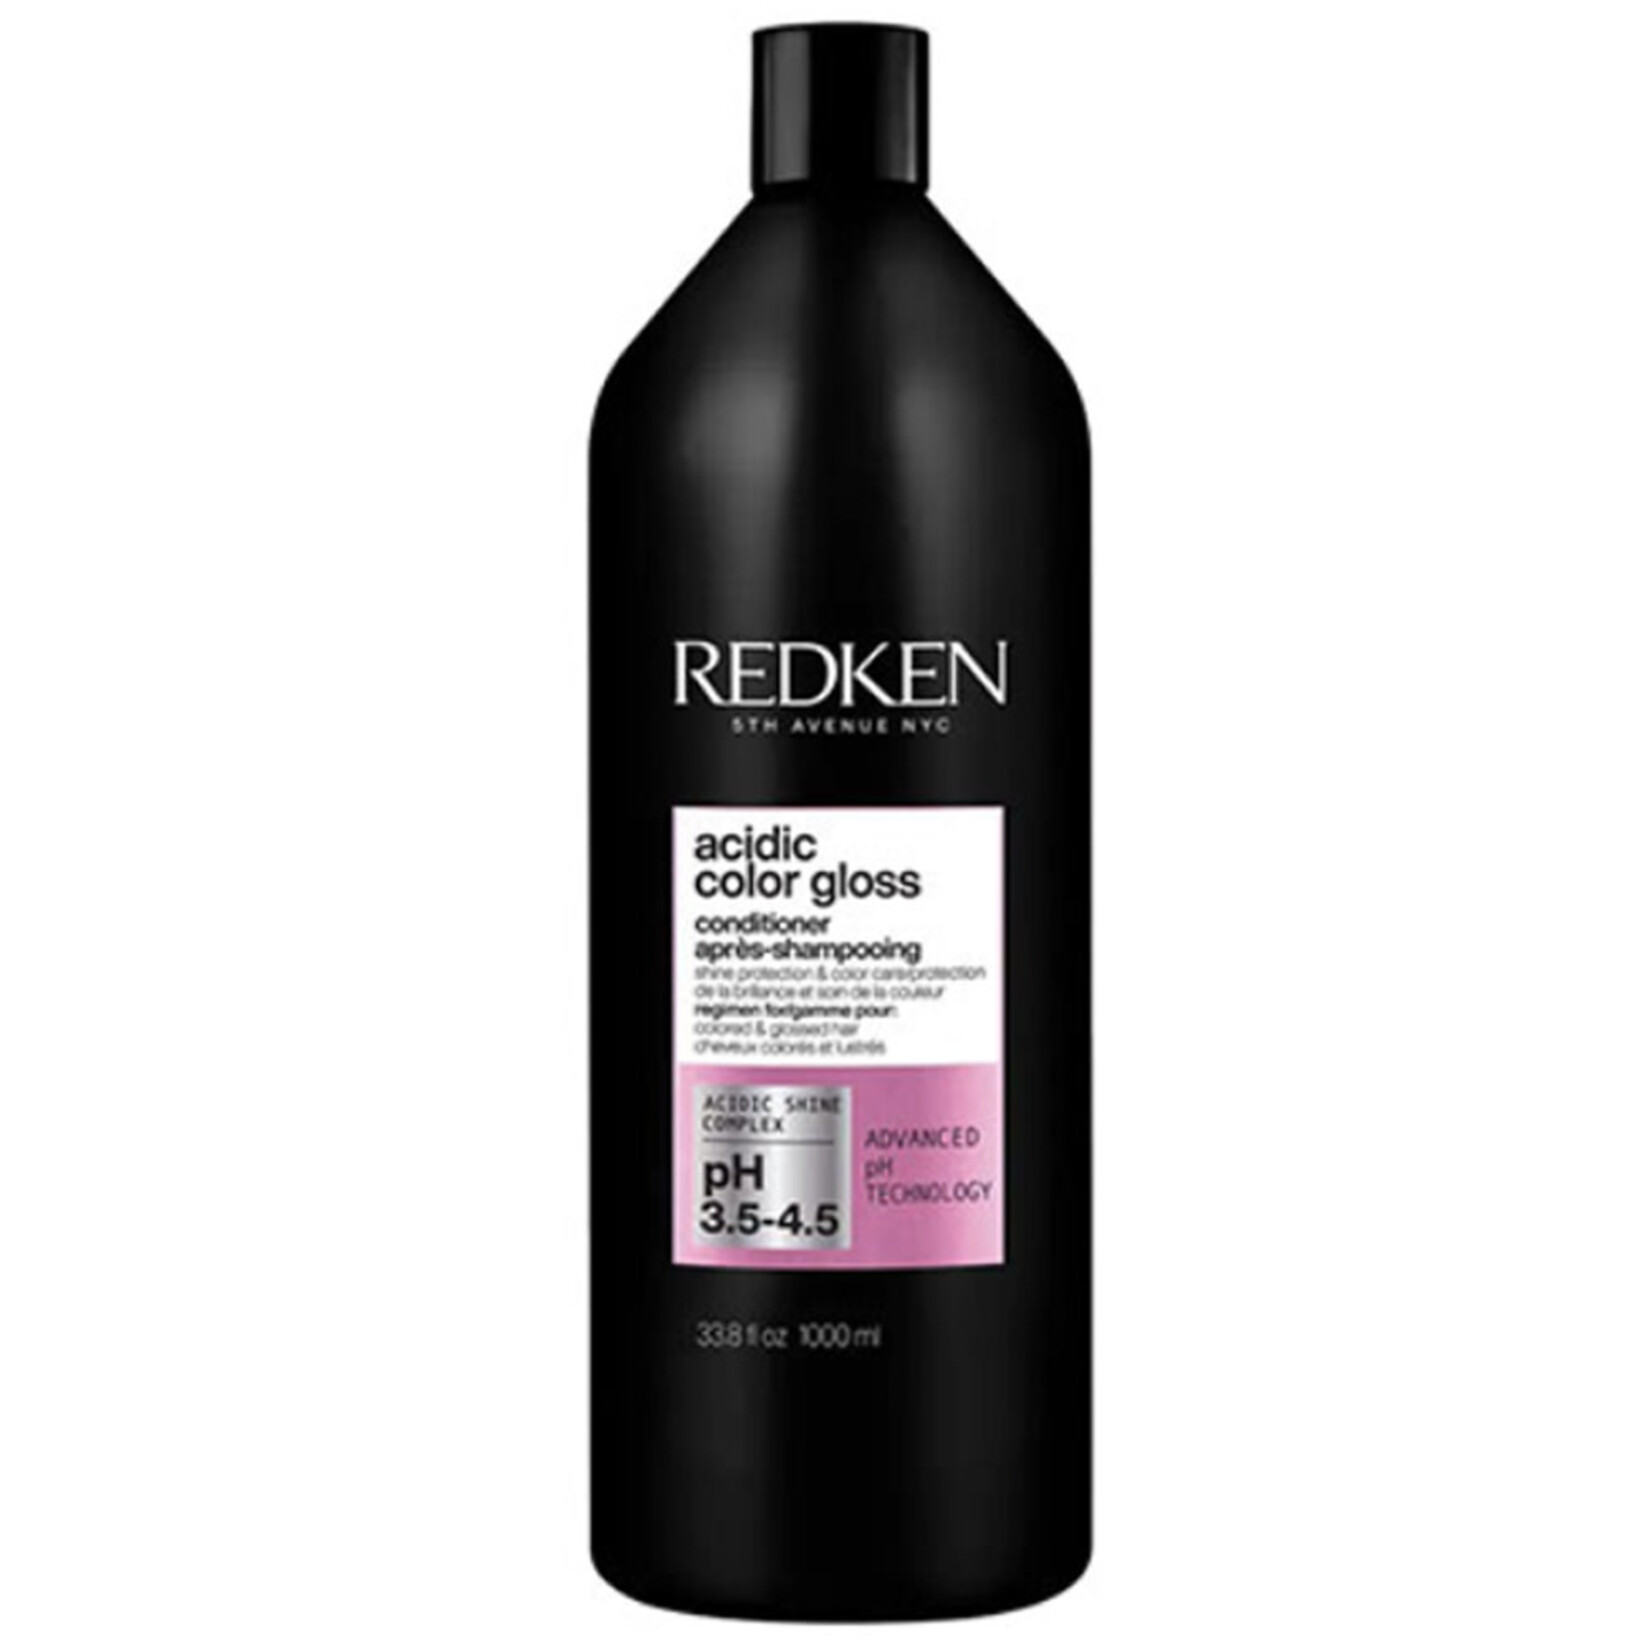 Redken Redken - Acidic color gloss - Conditioner 1 litre